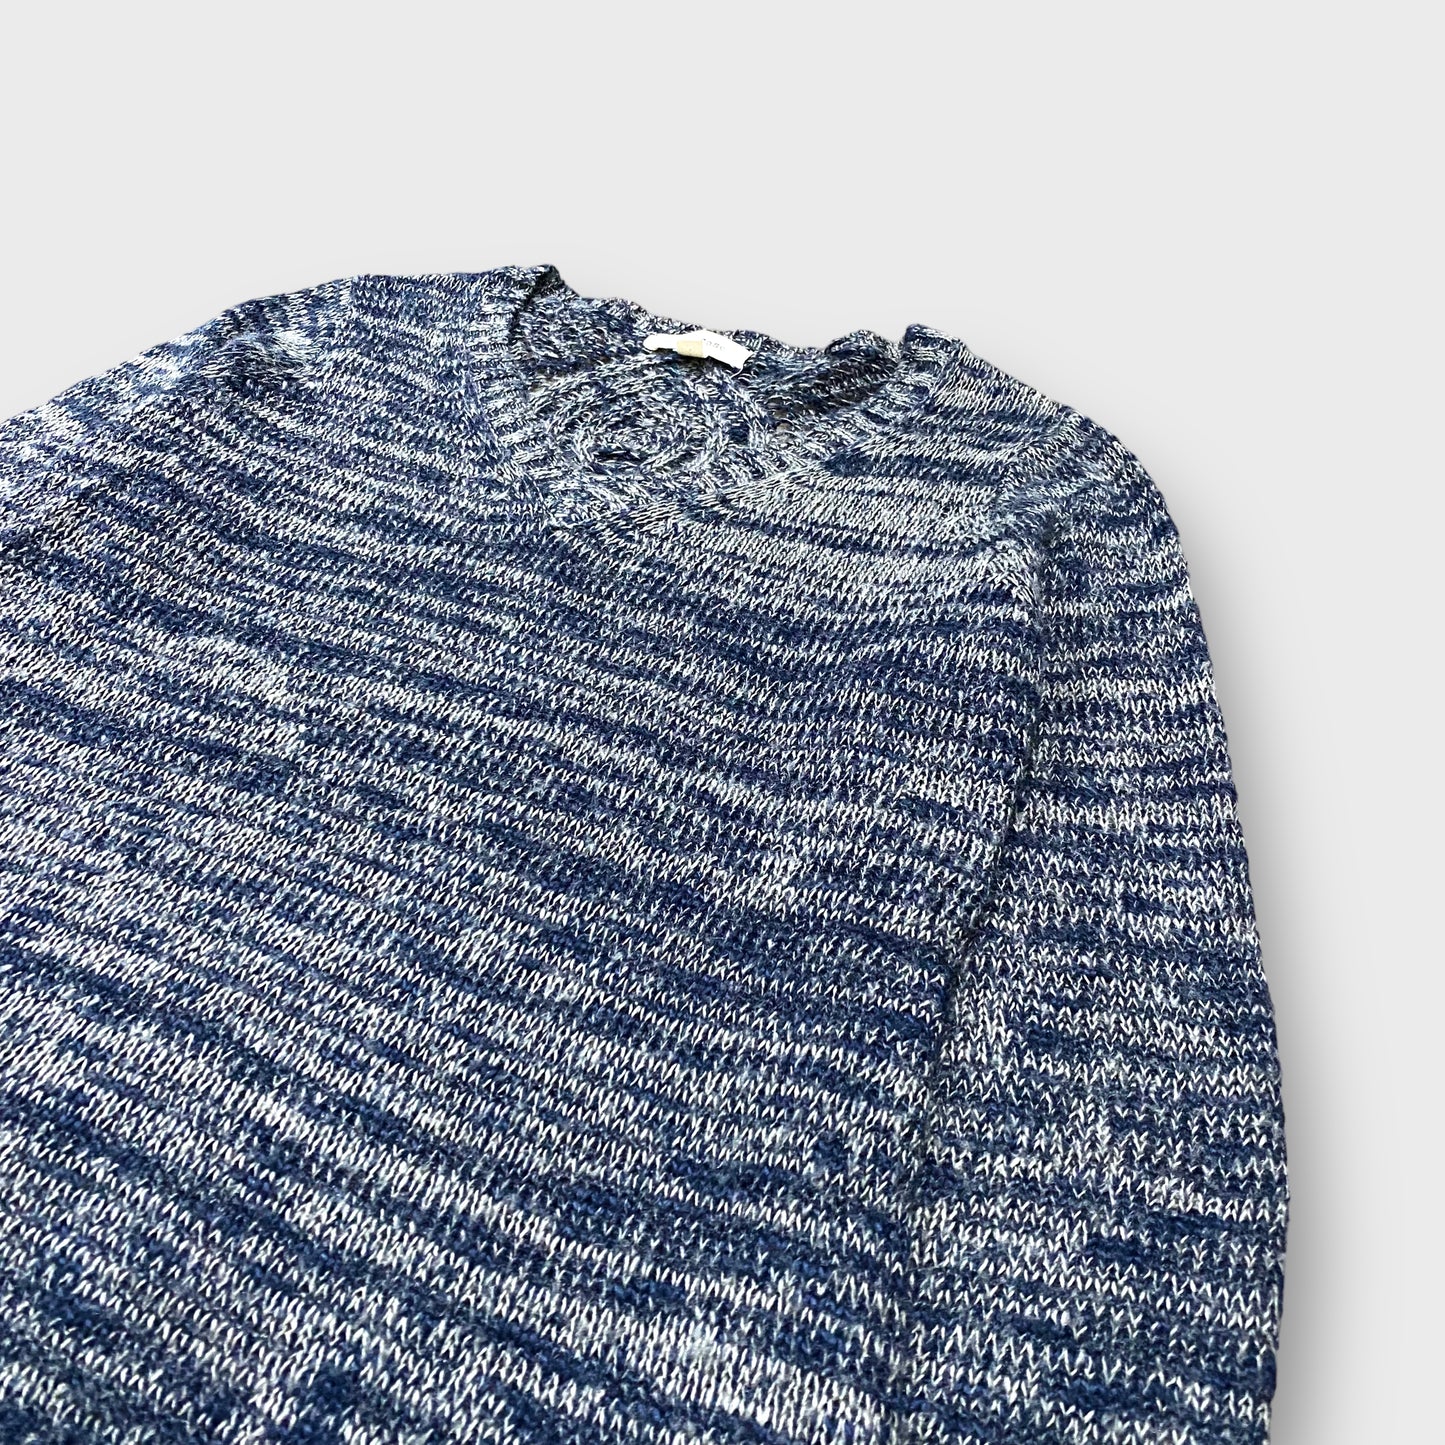 Gradation design knit sweater